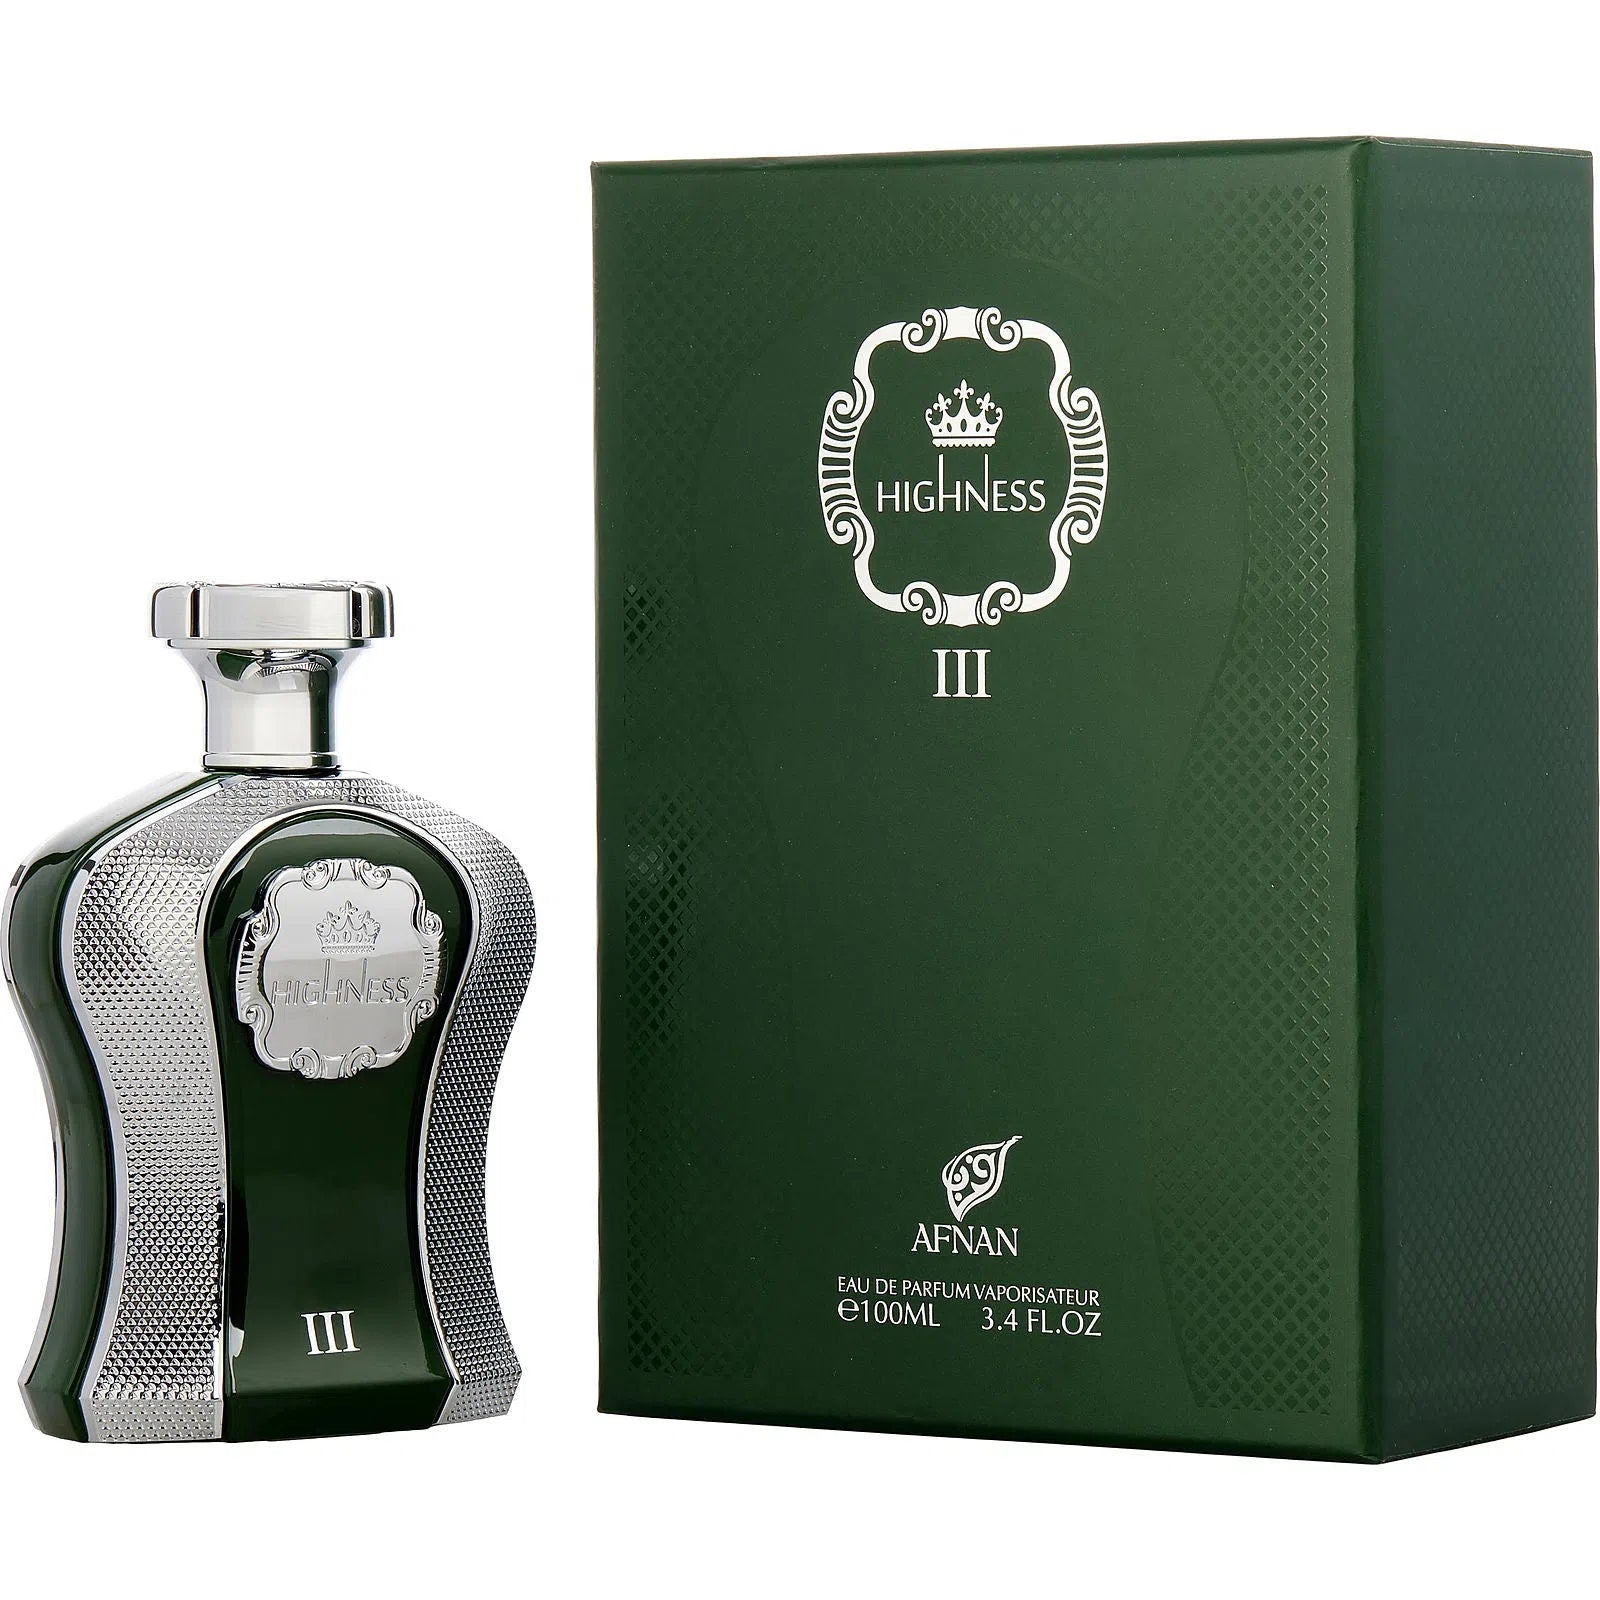 Perfume Afnan His Highness III Green EDP (M) / 100 ml - 6290171002246- Prive Perfumes Honduras